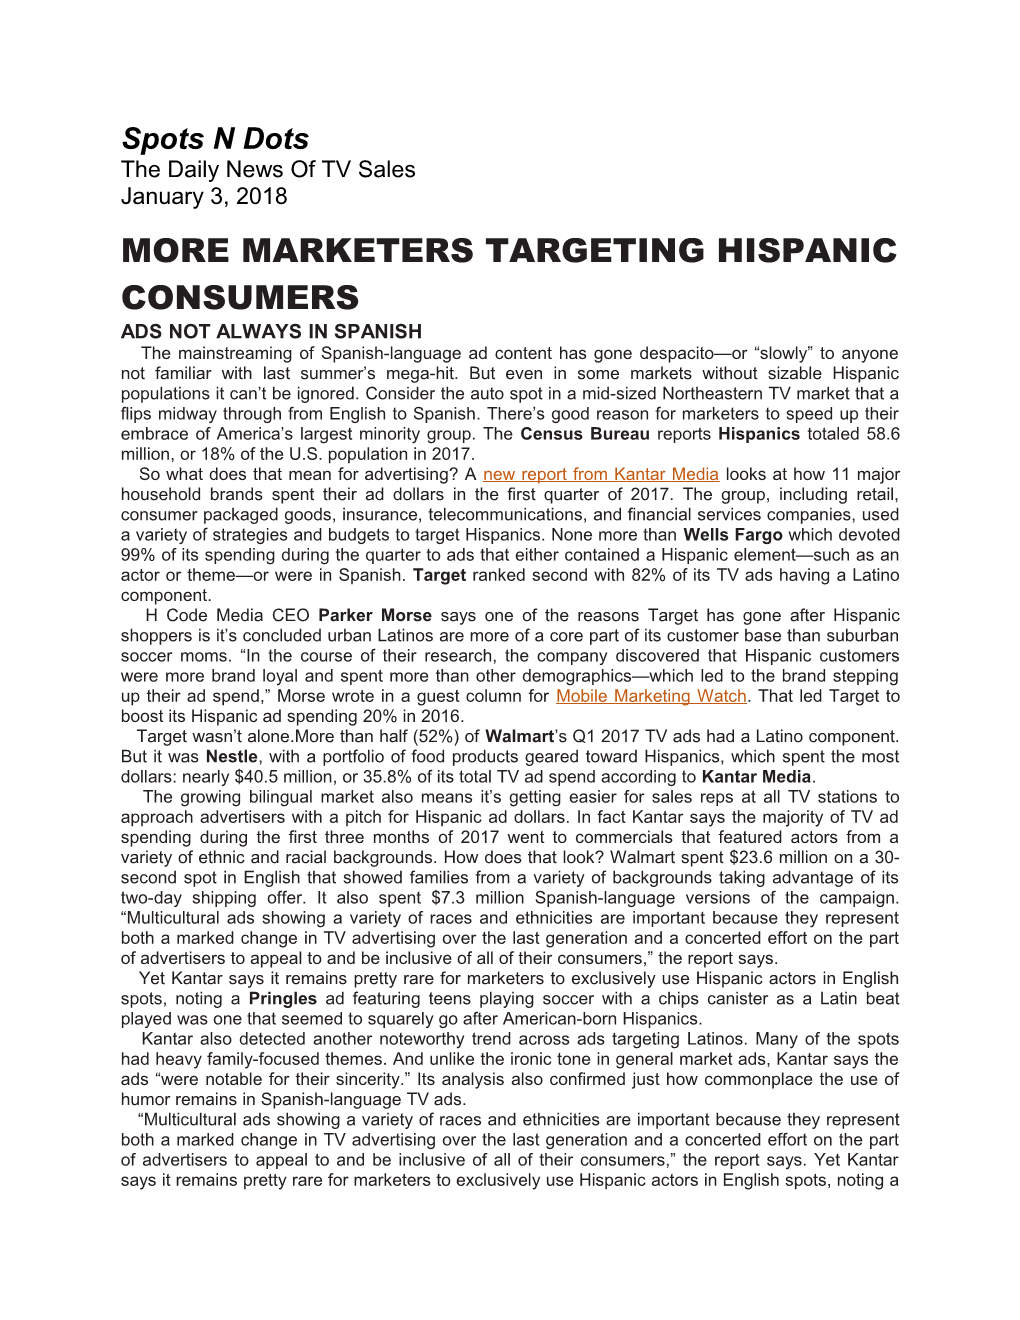 More Marketers Targeting Hispanic Consumers